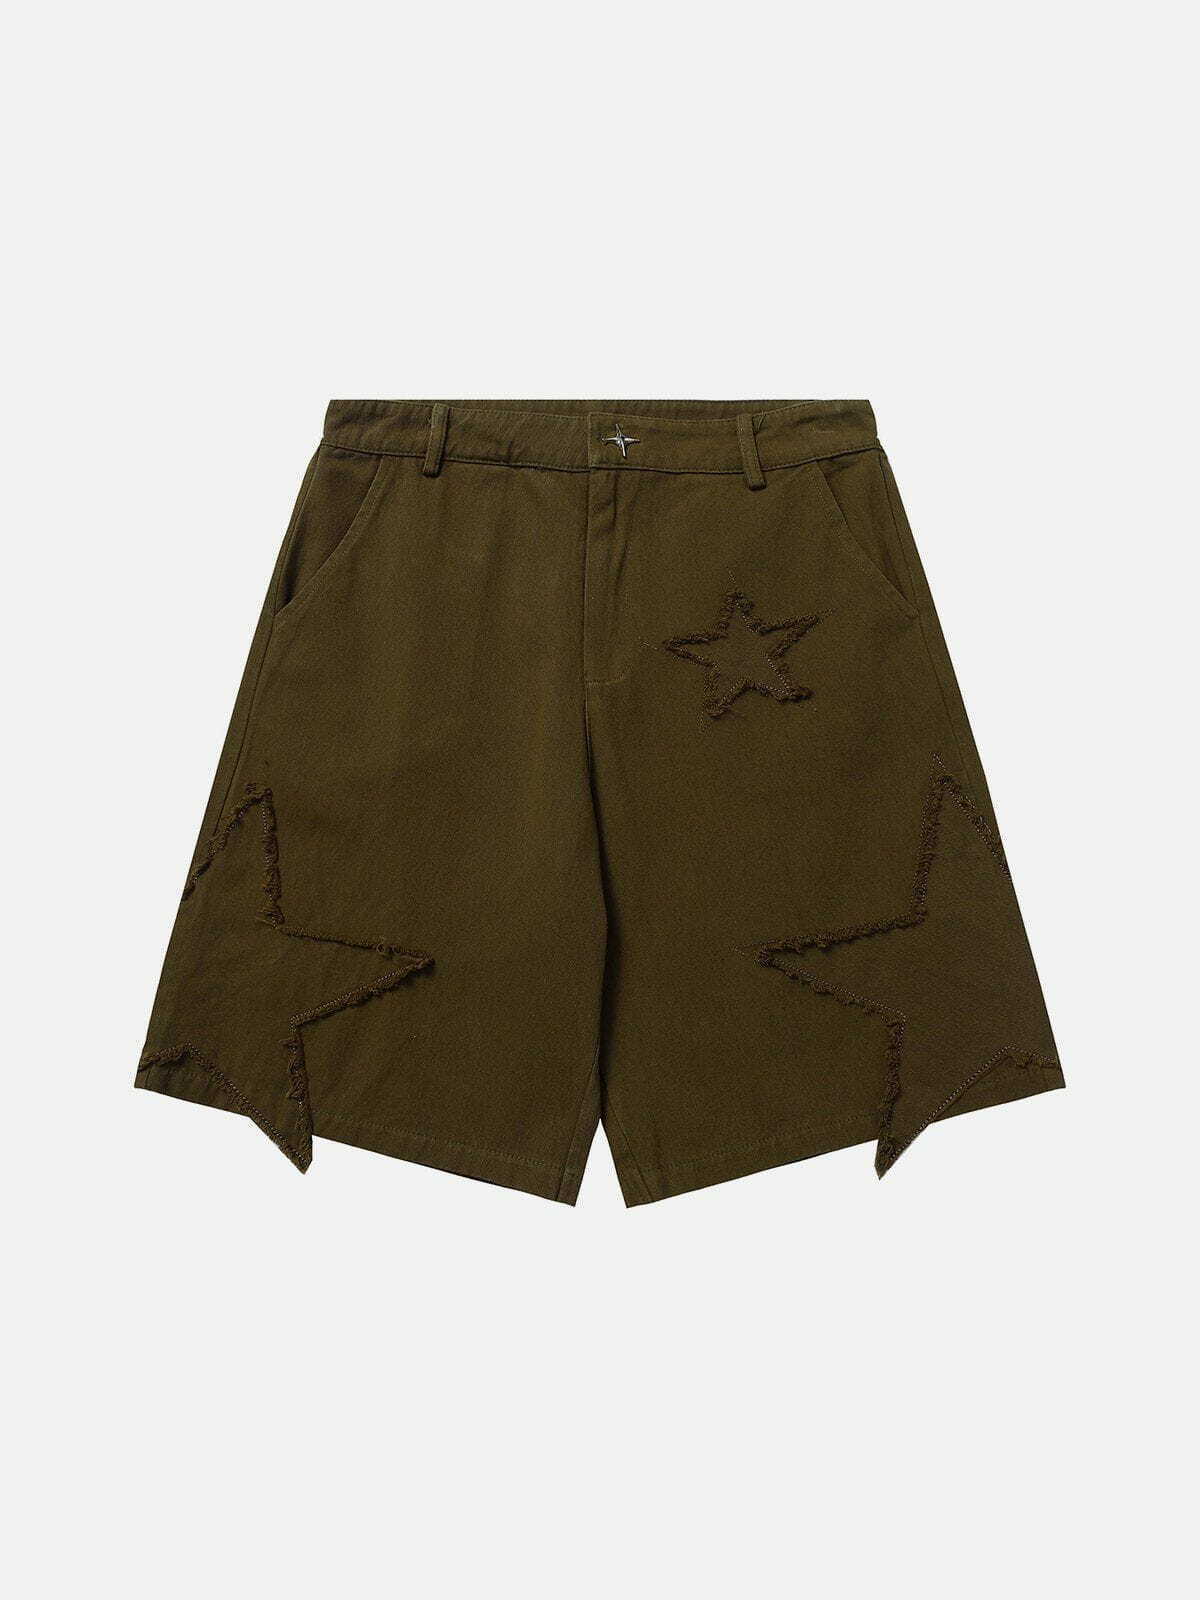 urban chic raw edge star cargo shorts   trendy & bold 2818